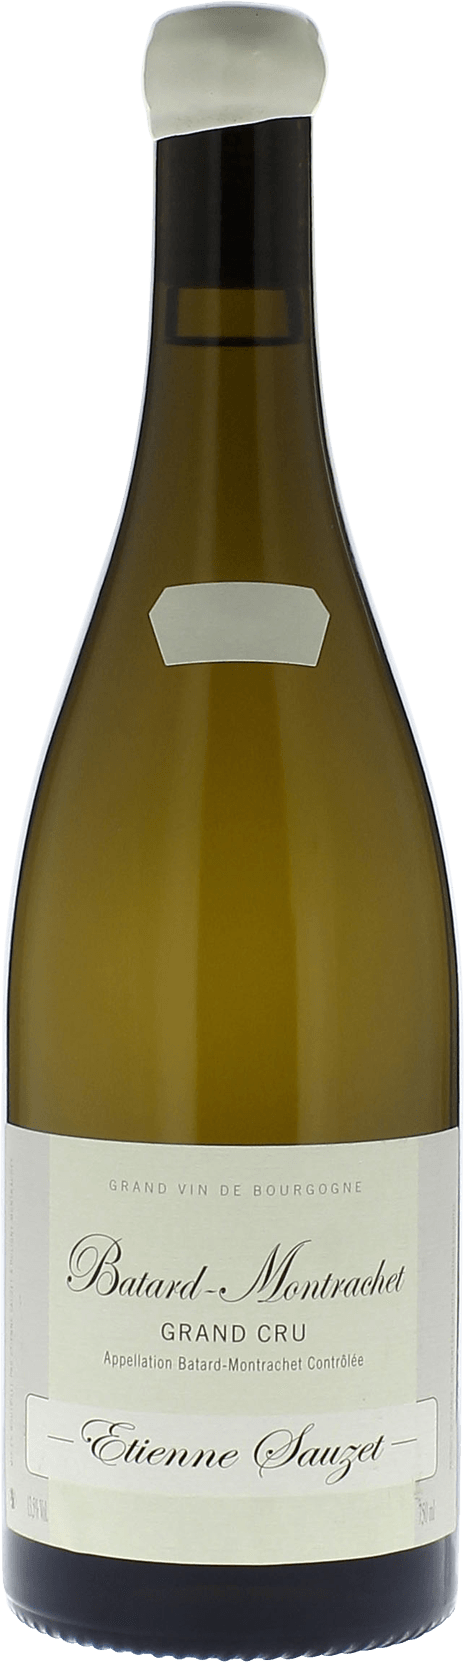 Batard montrachet grand cru 2017 Domaine SAUZET, Bourgogne blanc